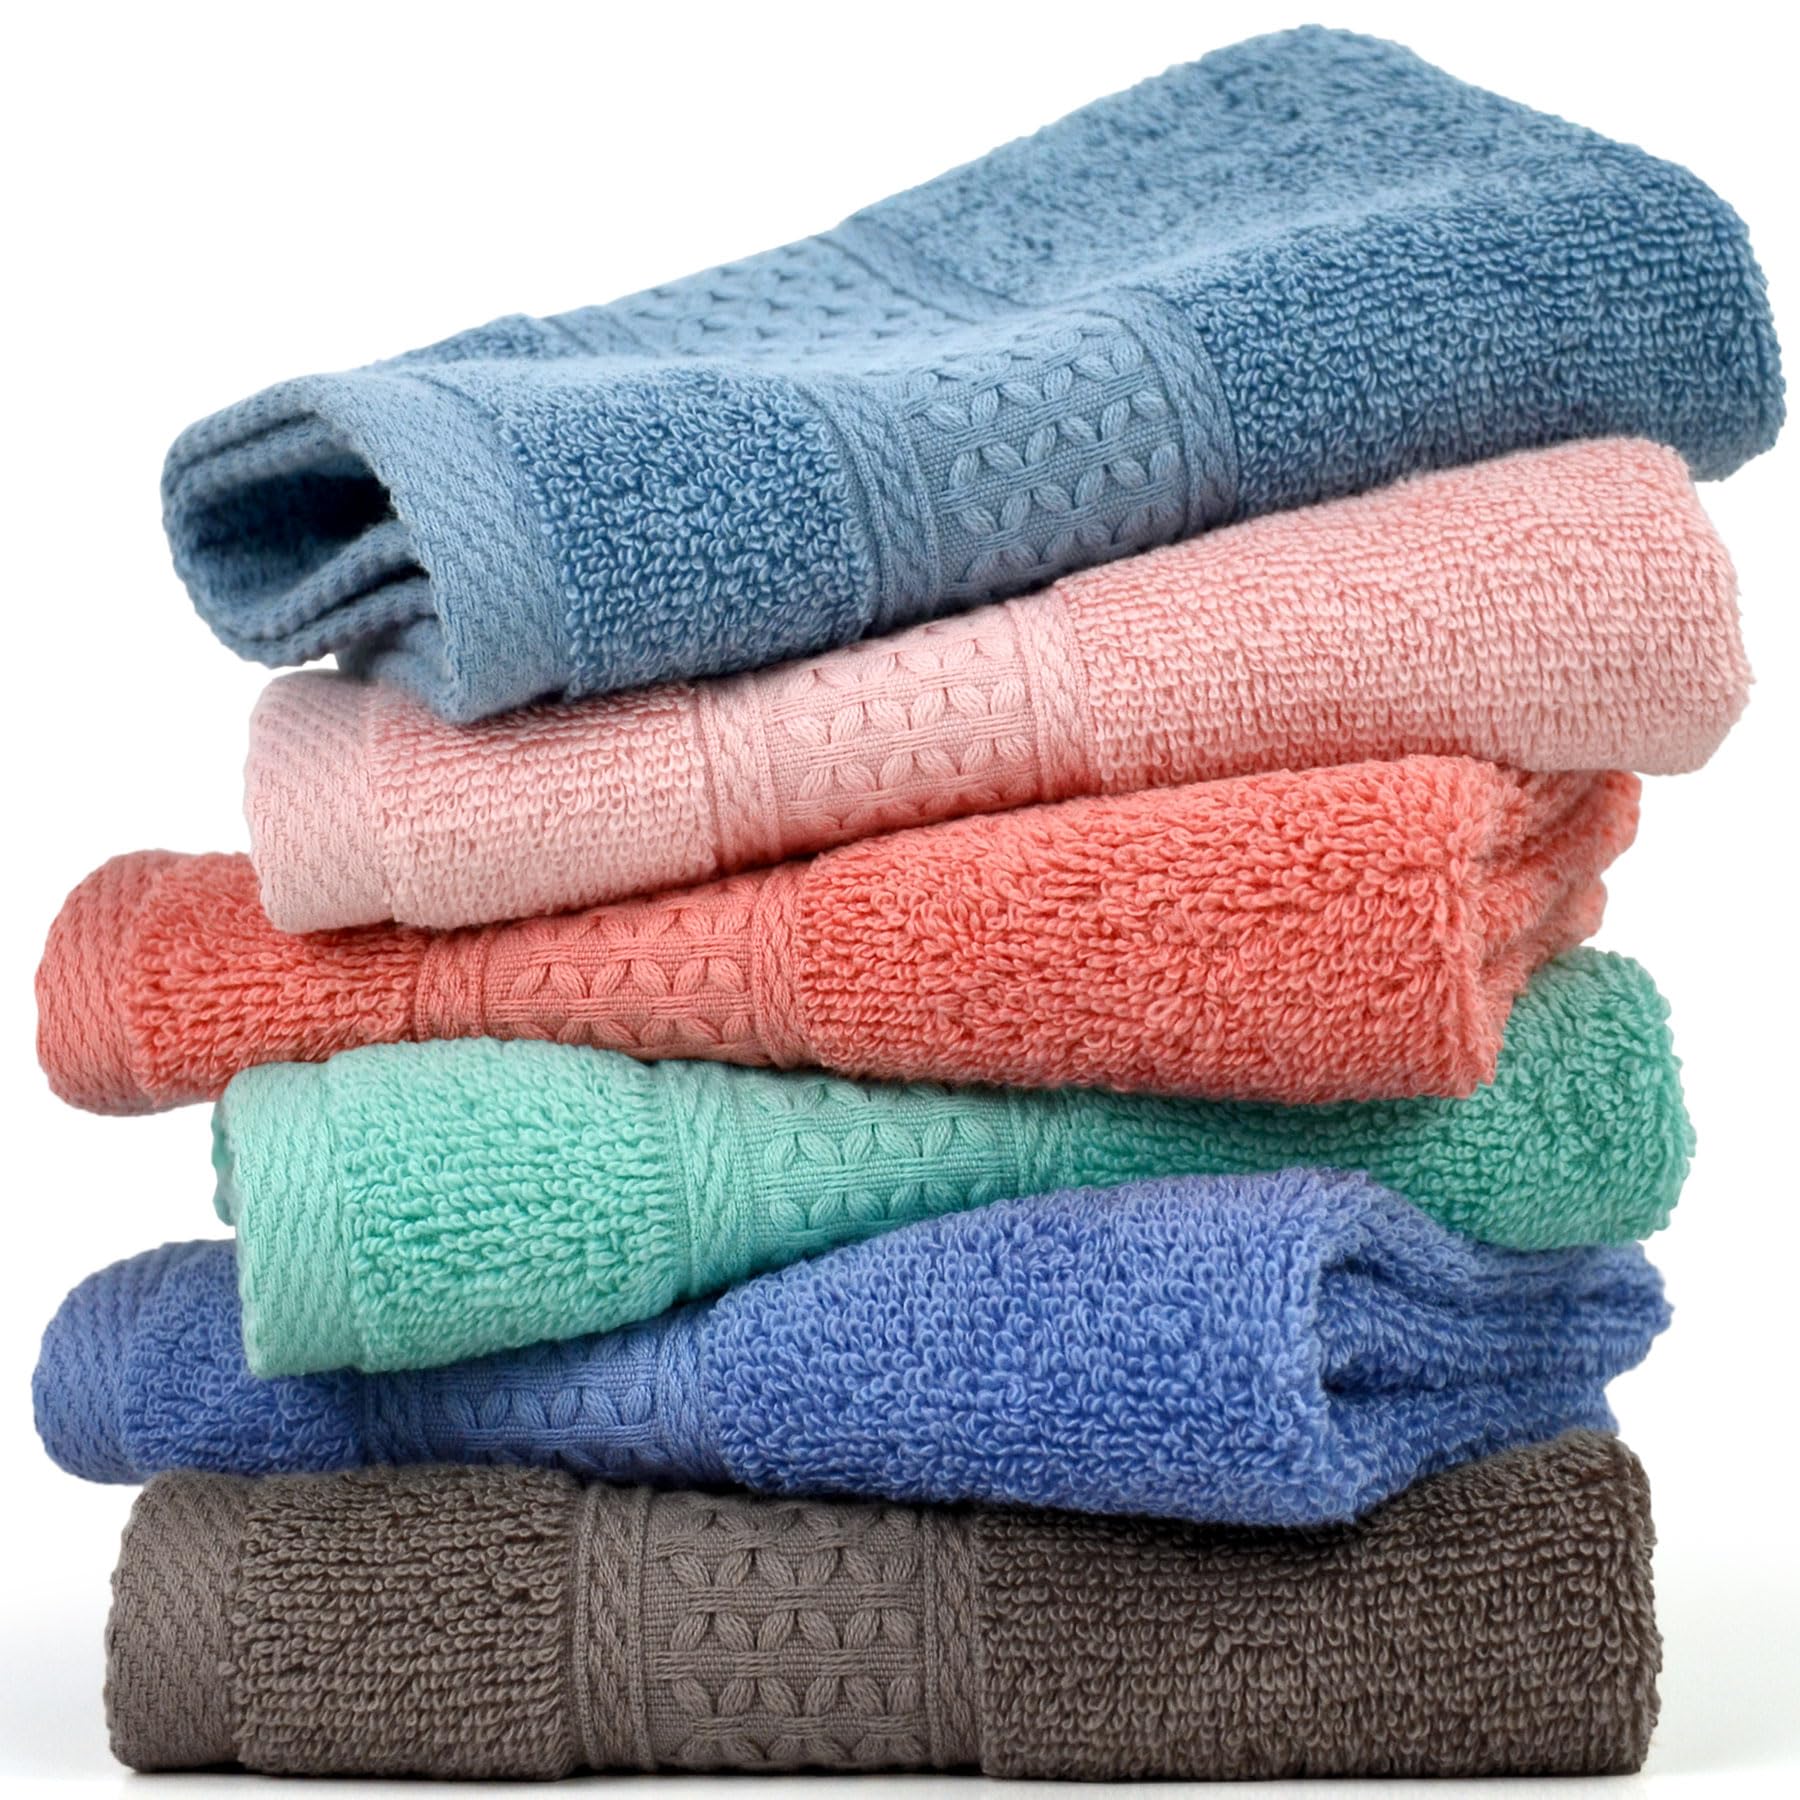 cleanbear Face-cloth Washcloths Set,100% cotton, High Absorbent, 6-Pack 6 colors, Size13 x13-deep color